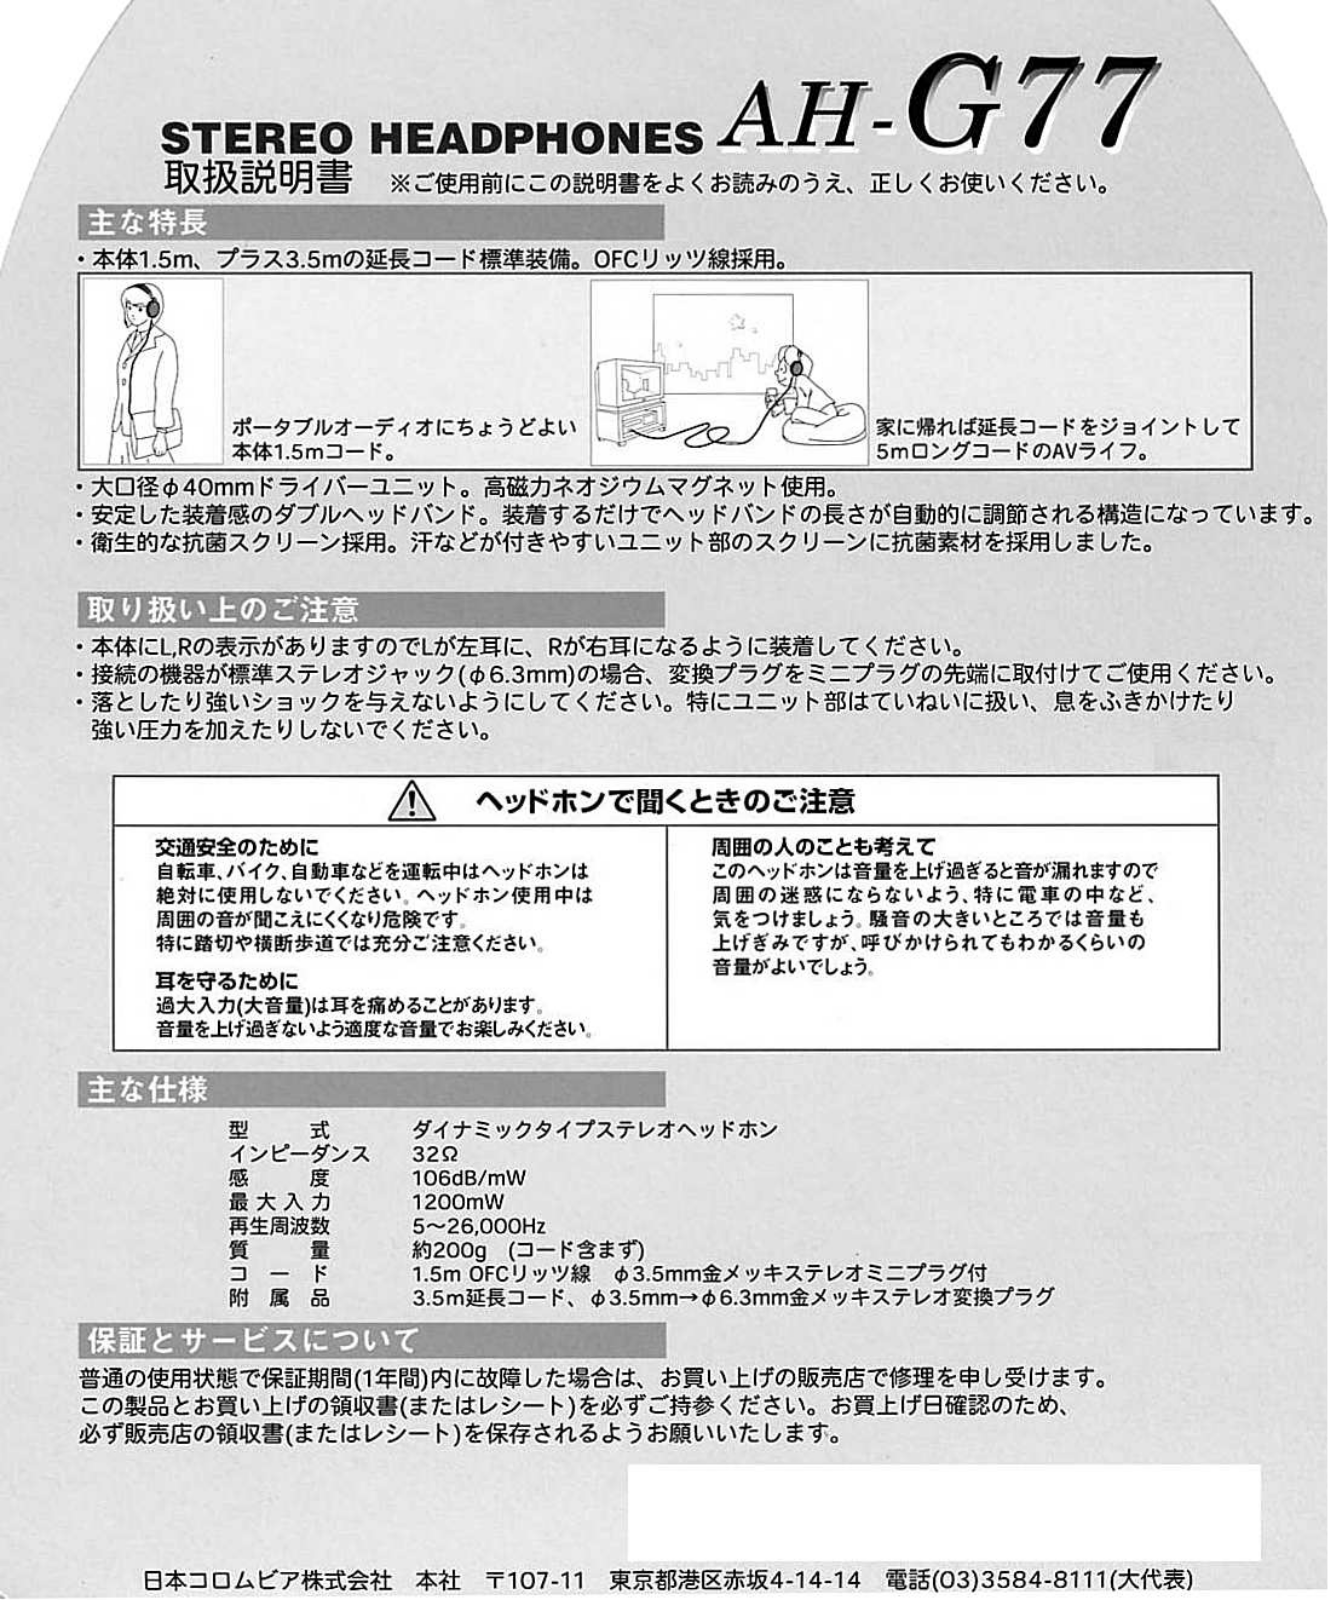 Denon AH-G77 Owner's Manual